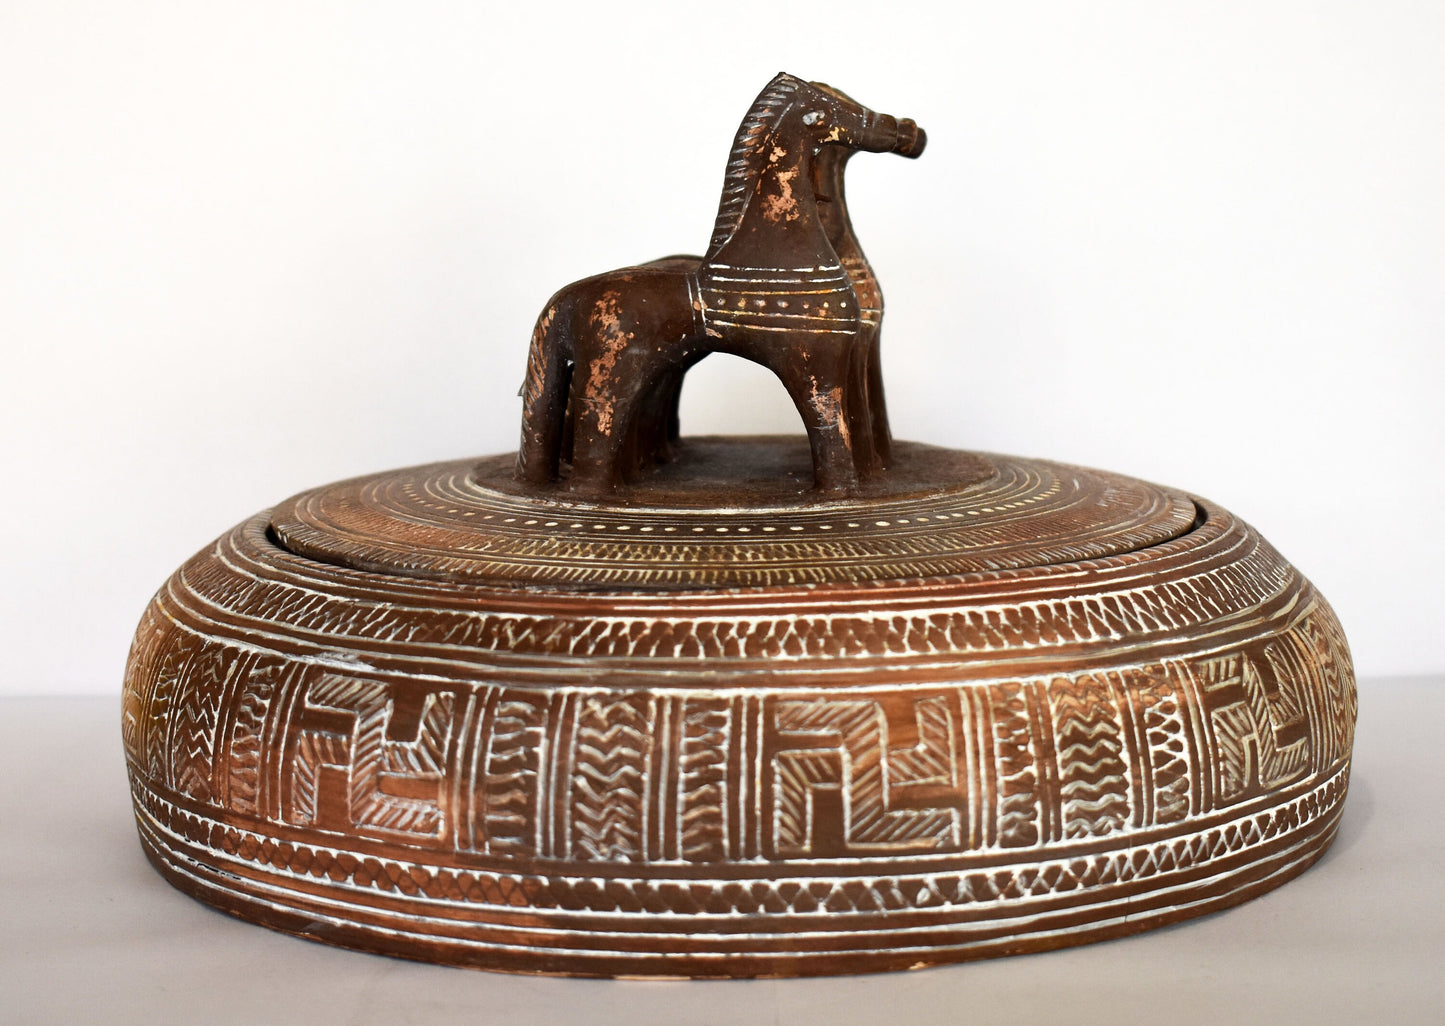 Pyxis Geometric Vase -  Cylindrical Box - Three Horses - Athens, Attica - Geometric, 800 BC -  Museum Reproduction - Ceramic Artifact